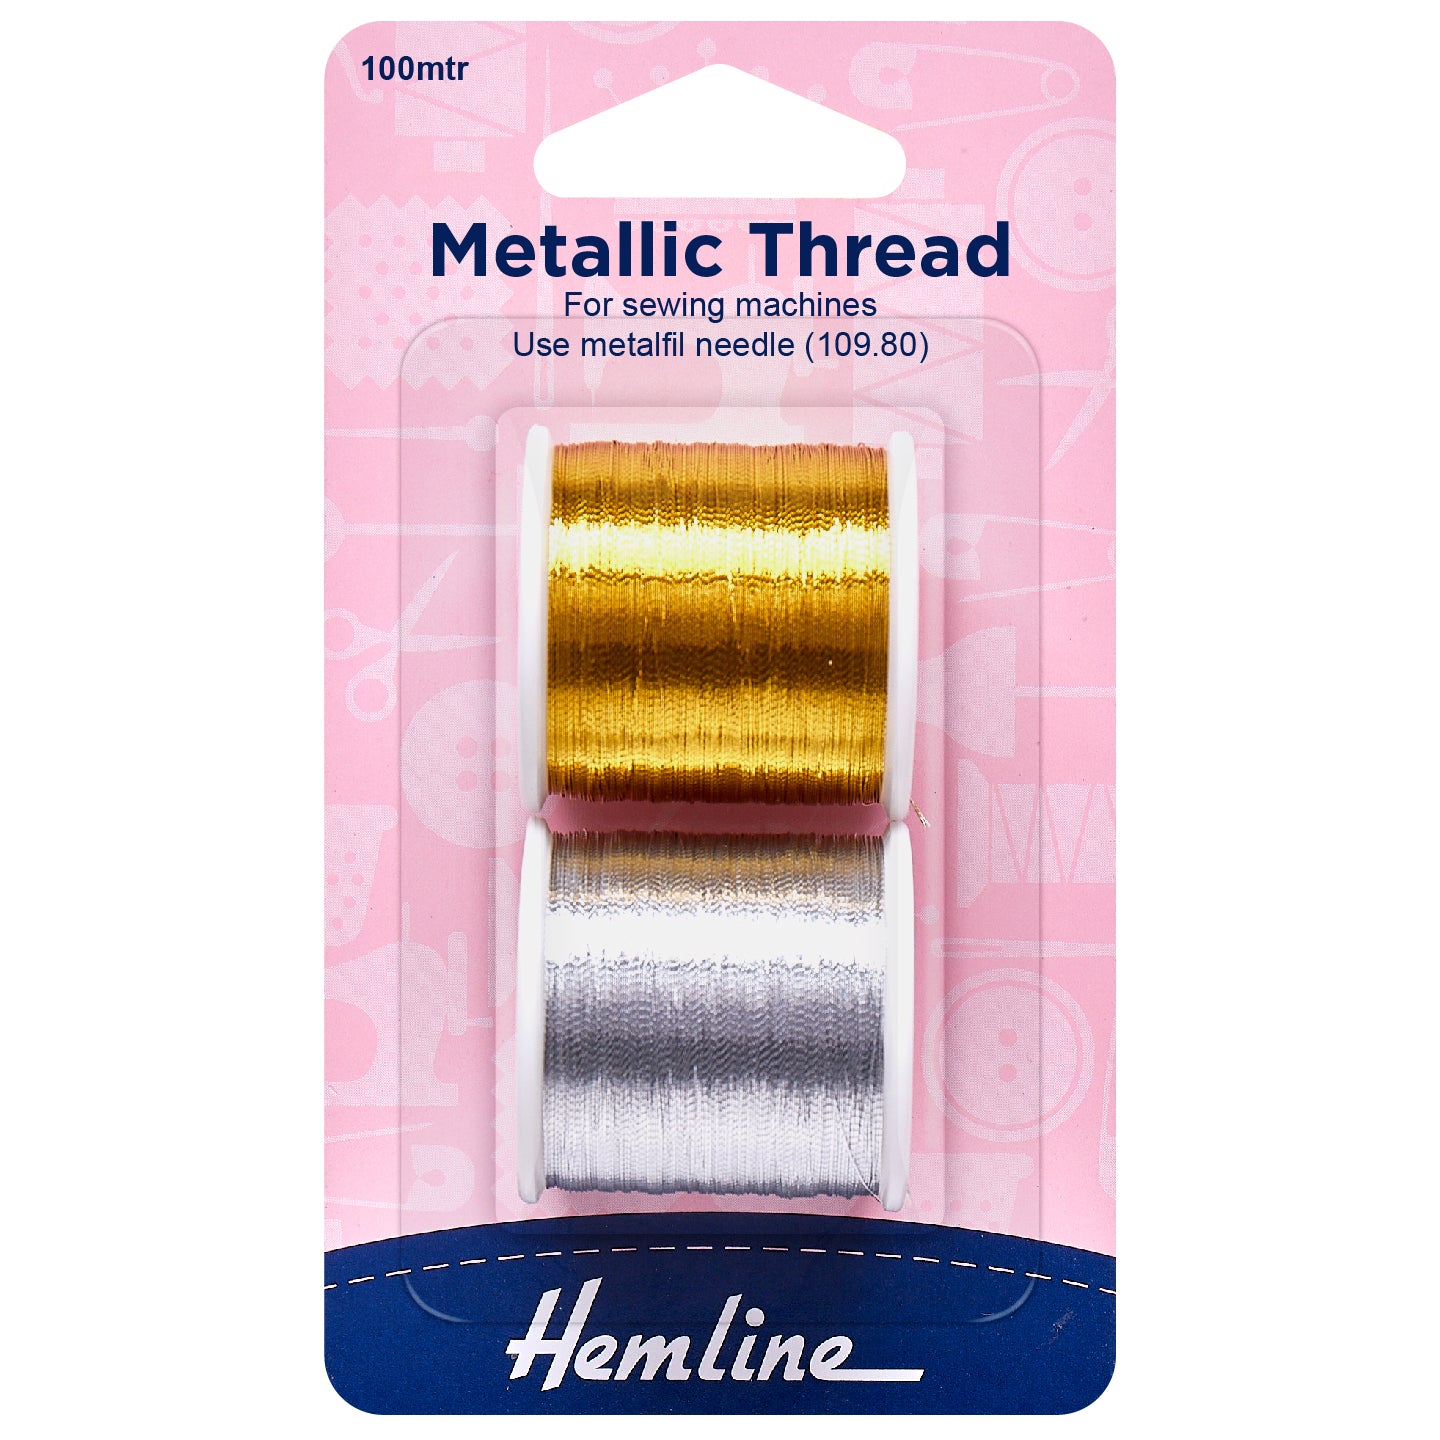 Hemline Metallic Thread for Sewing Machines - 100m